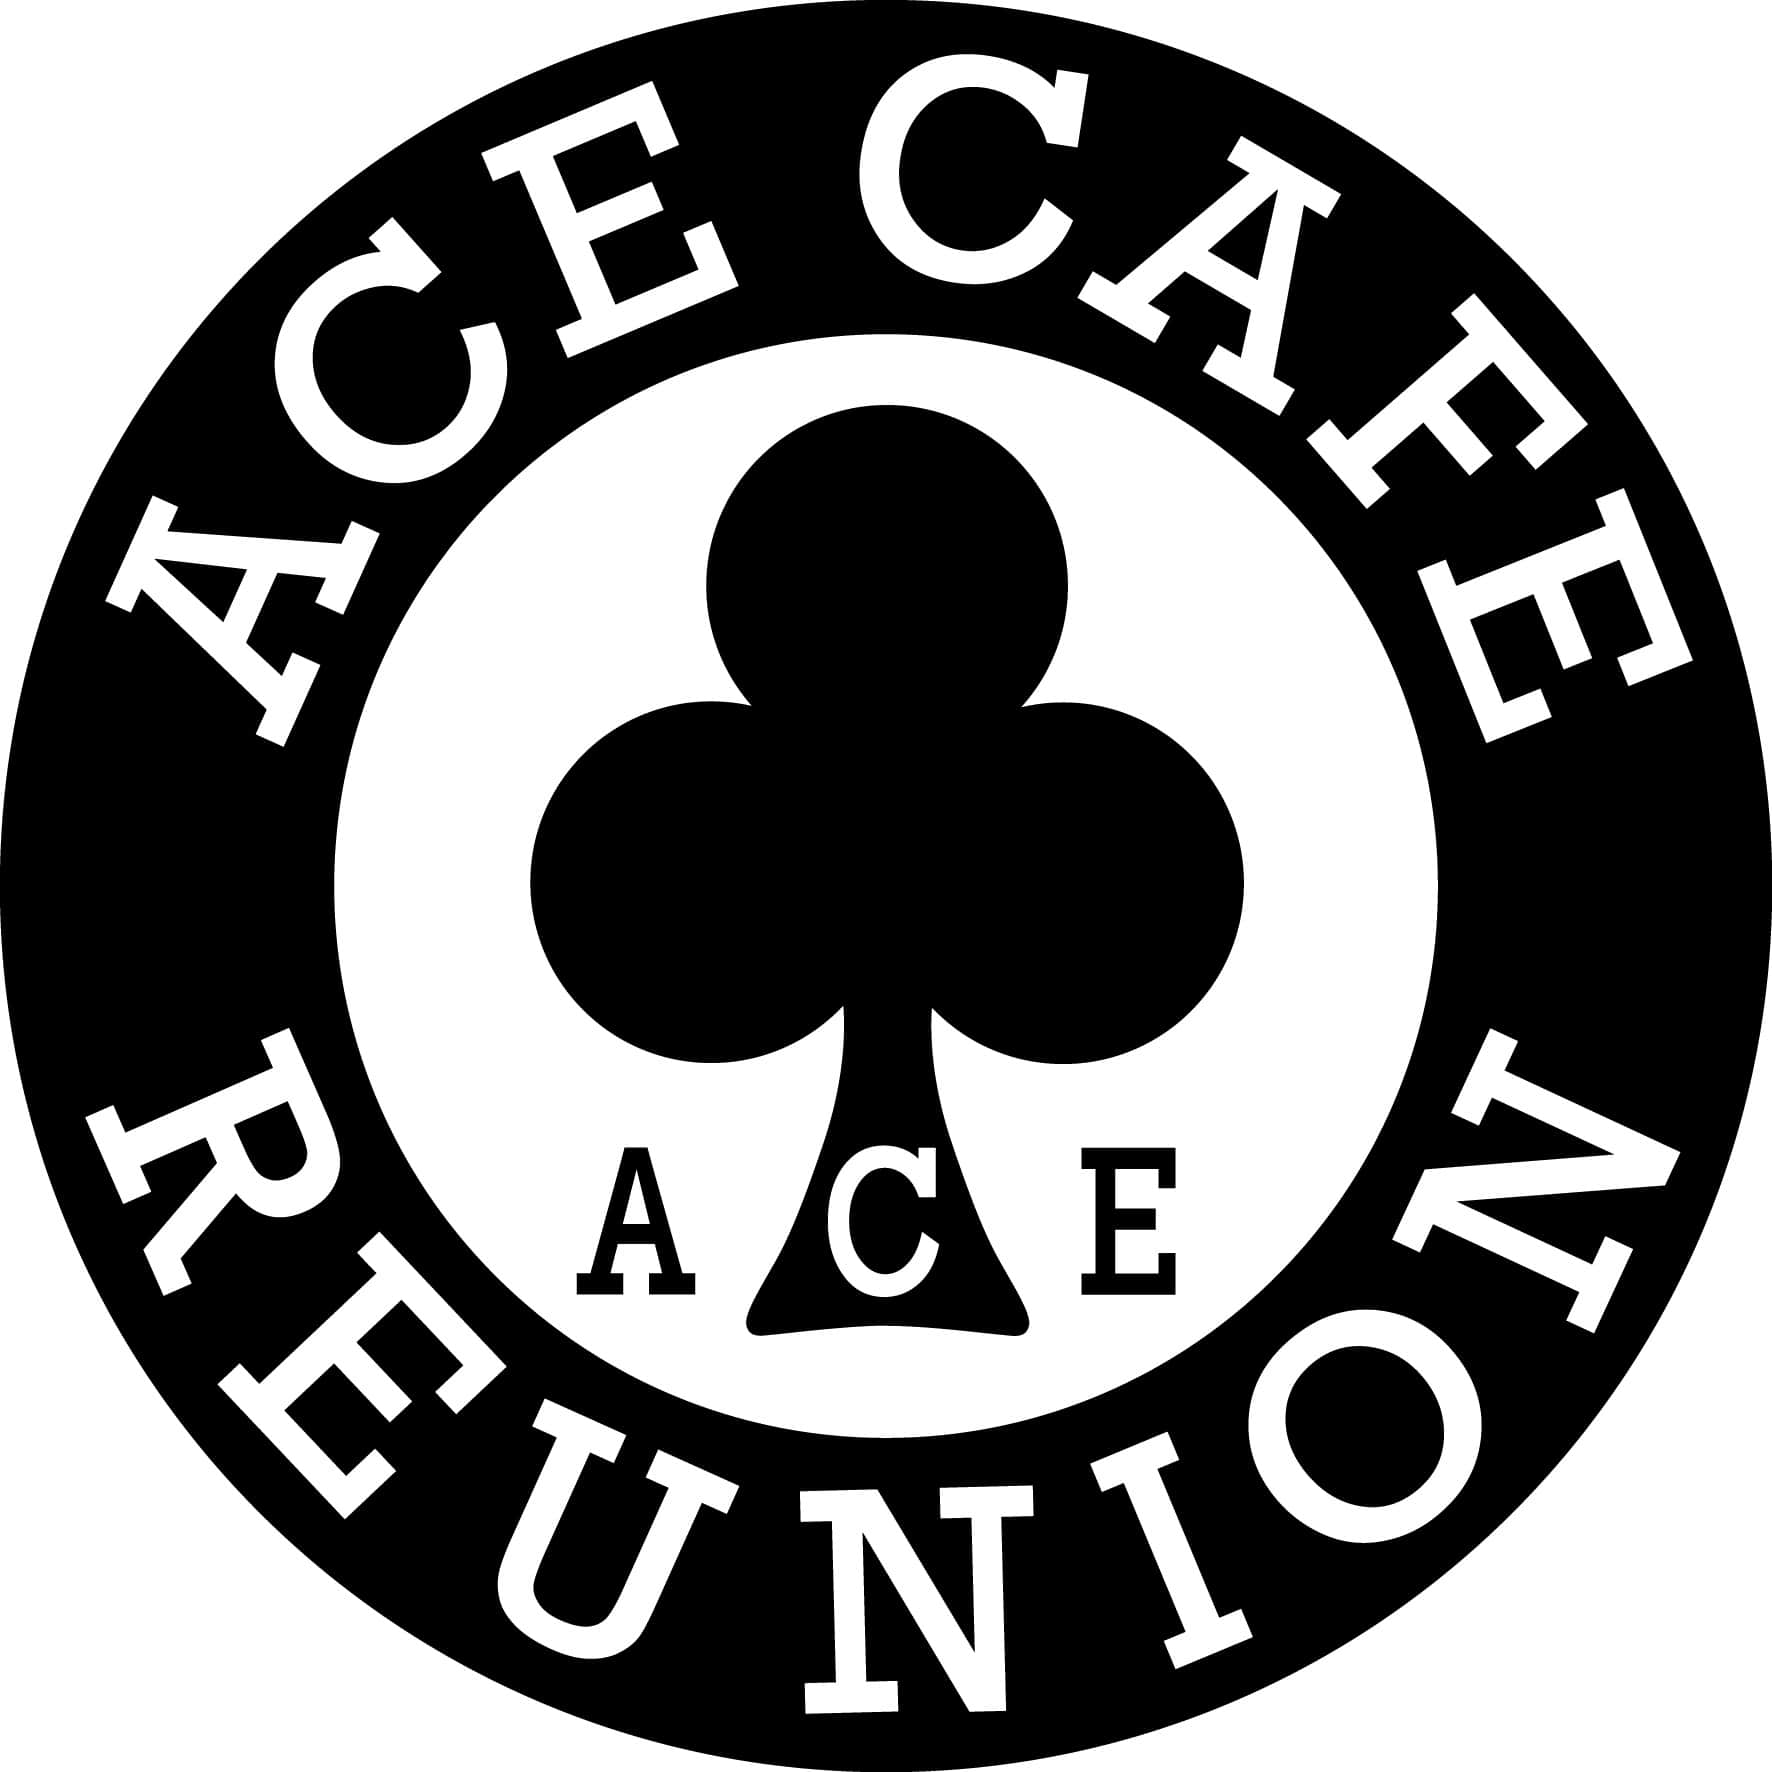 Ace Cafe London PNG - 97823